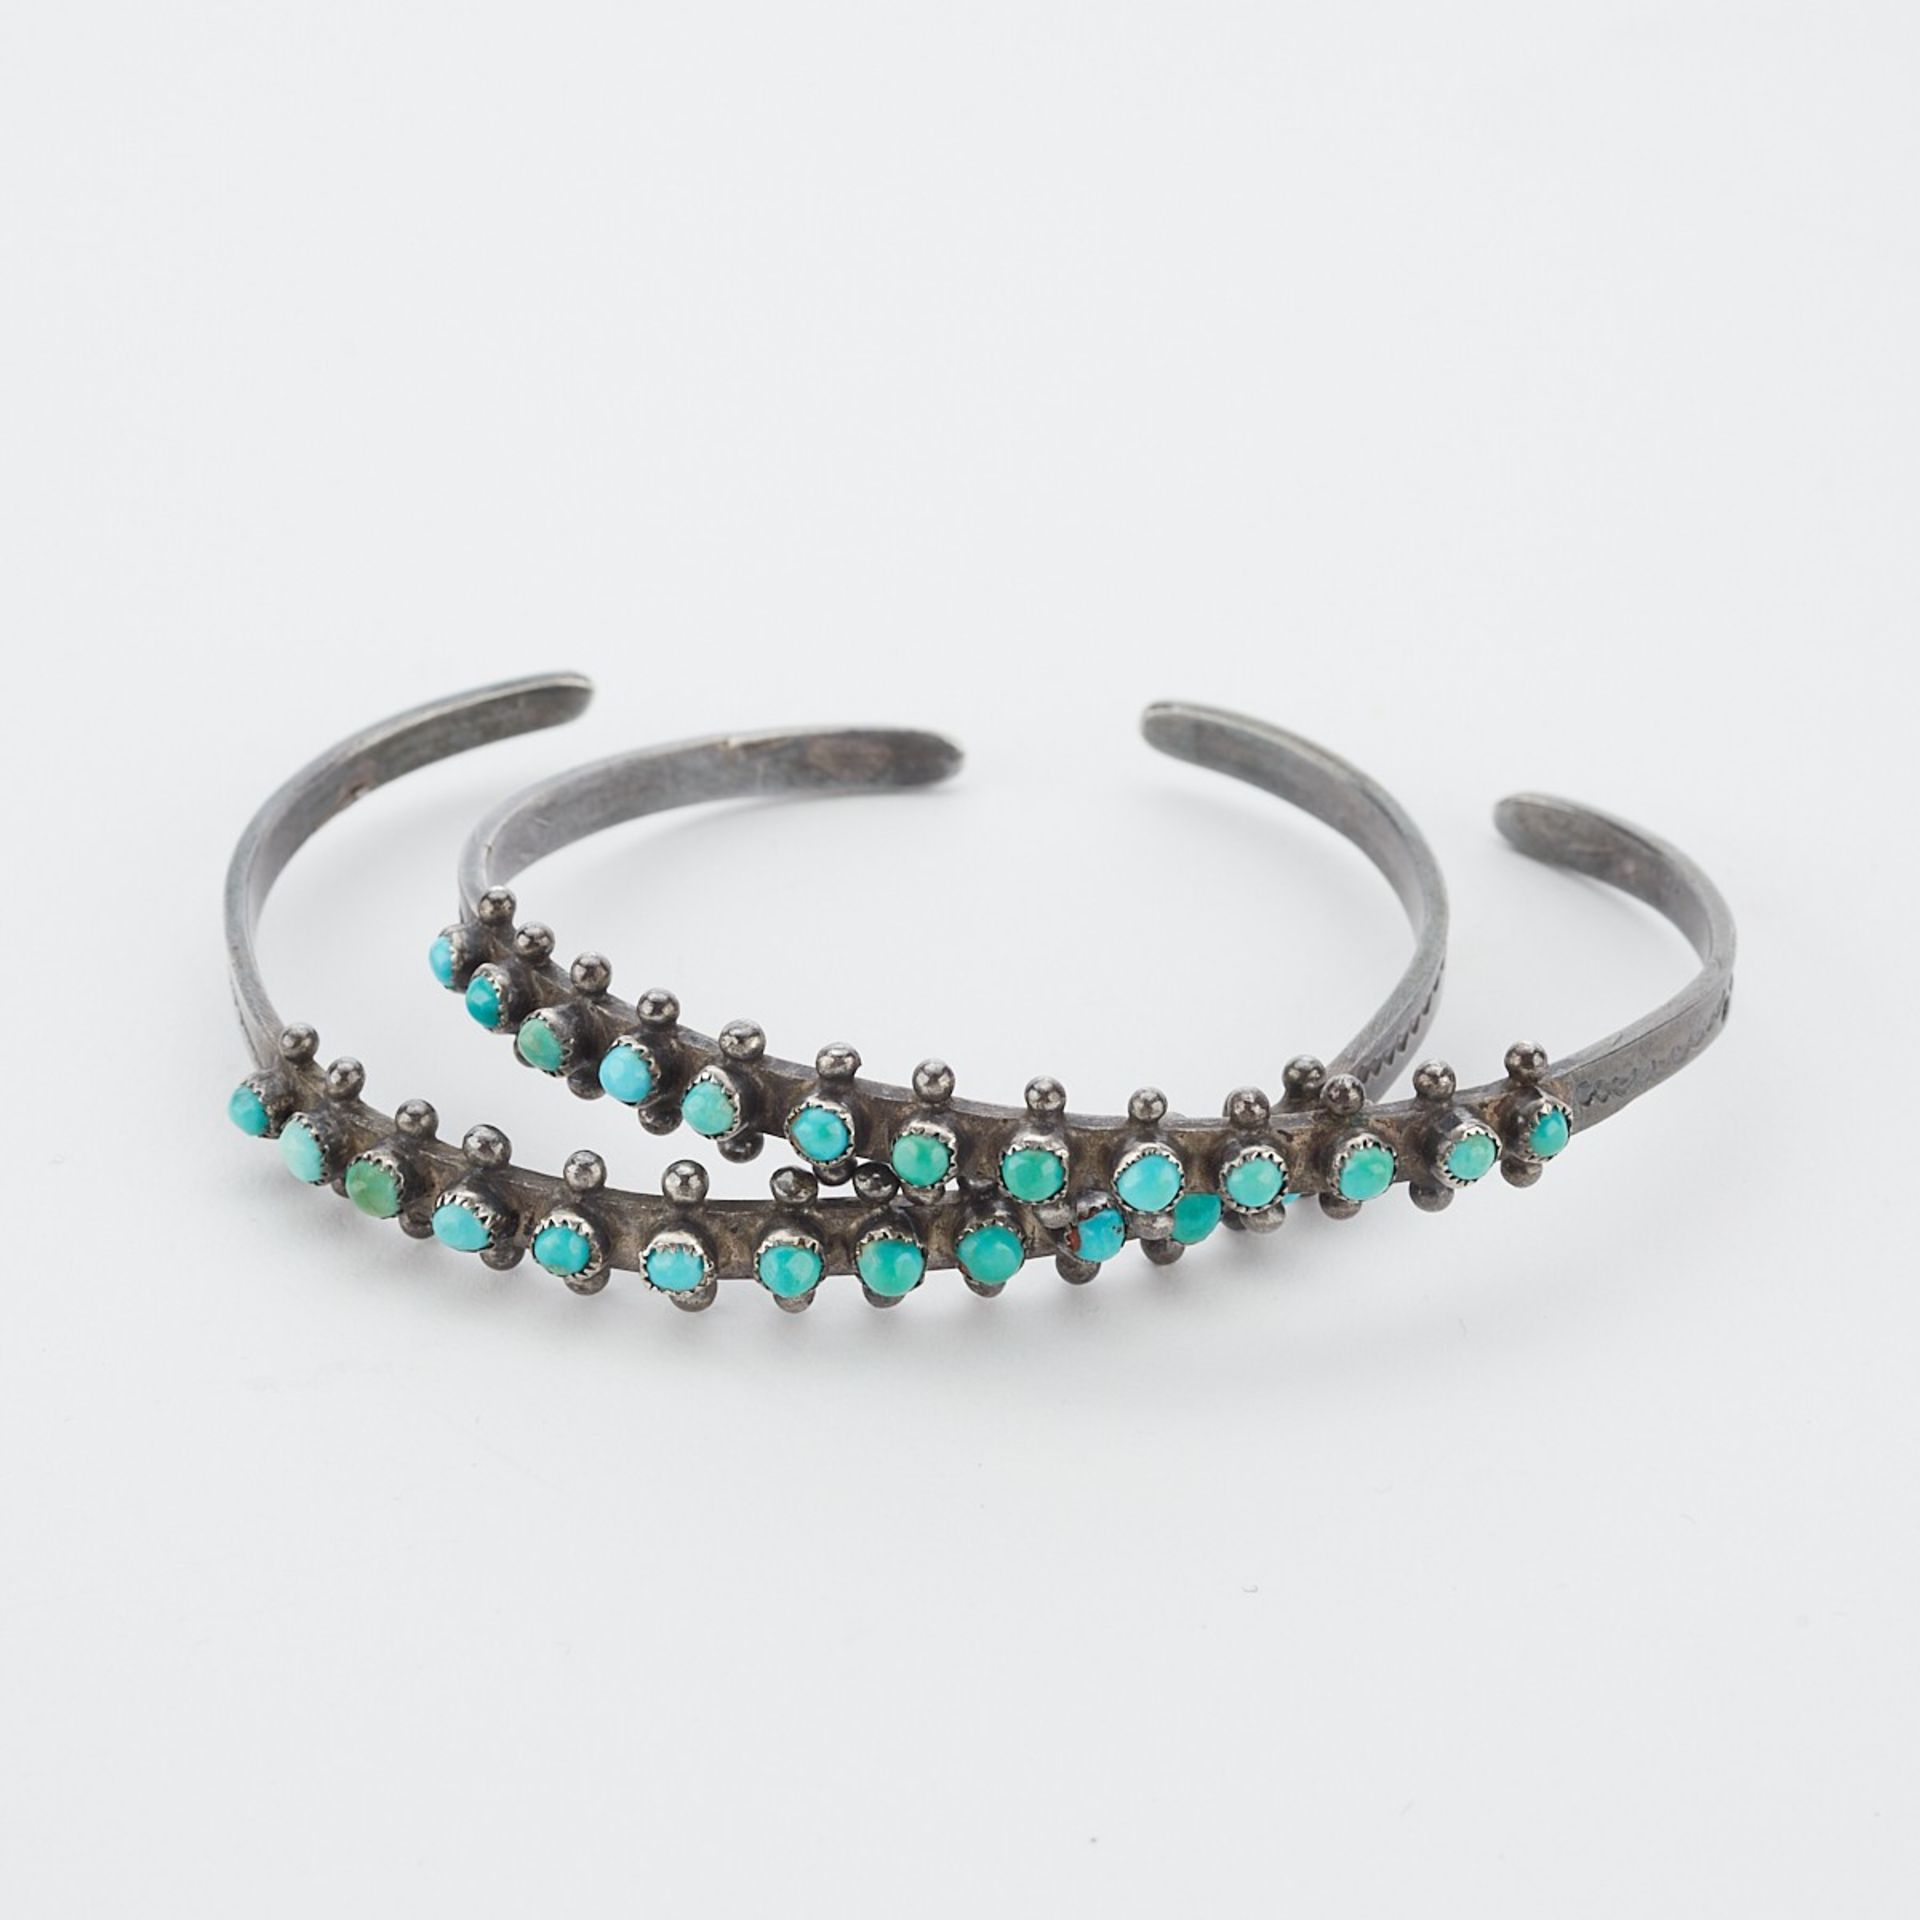 Group of 5 Southwest Turquoise Bracelet Cuffs - Image 10 of 10